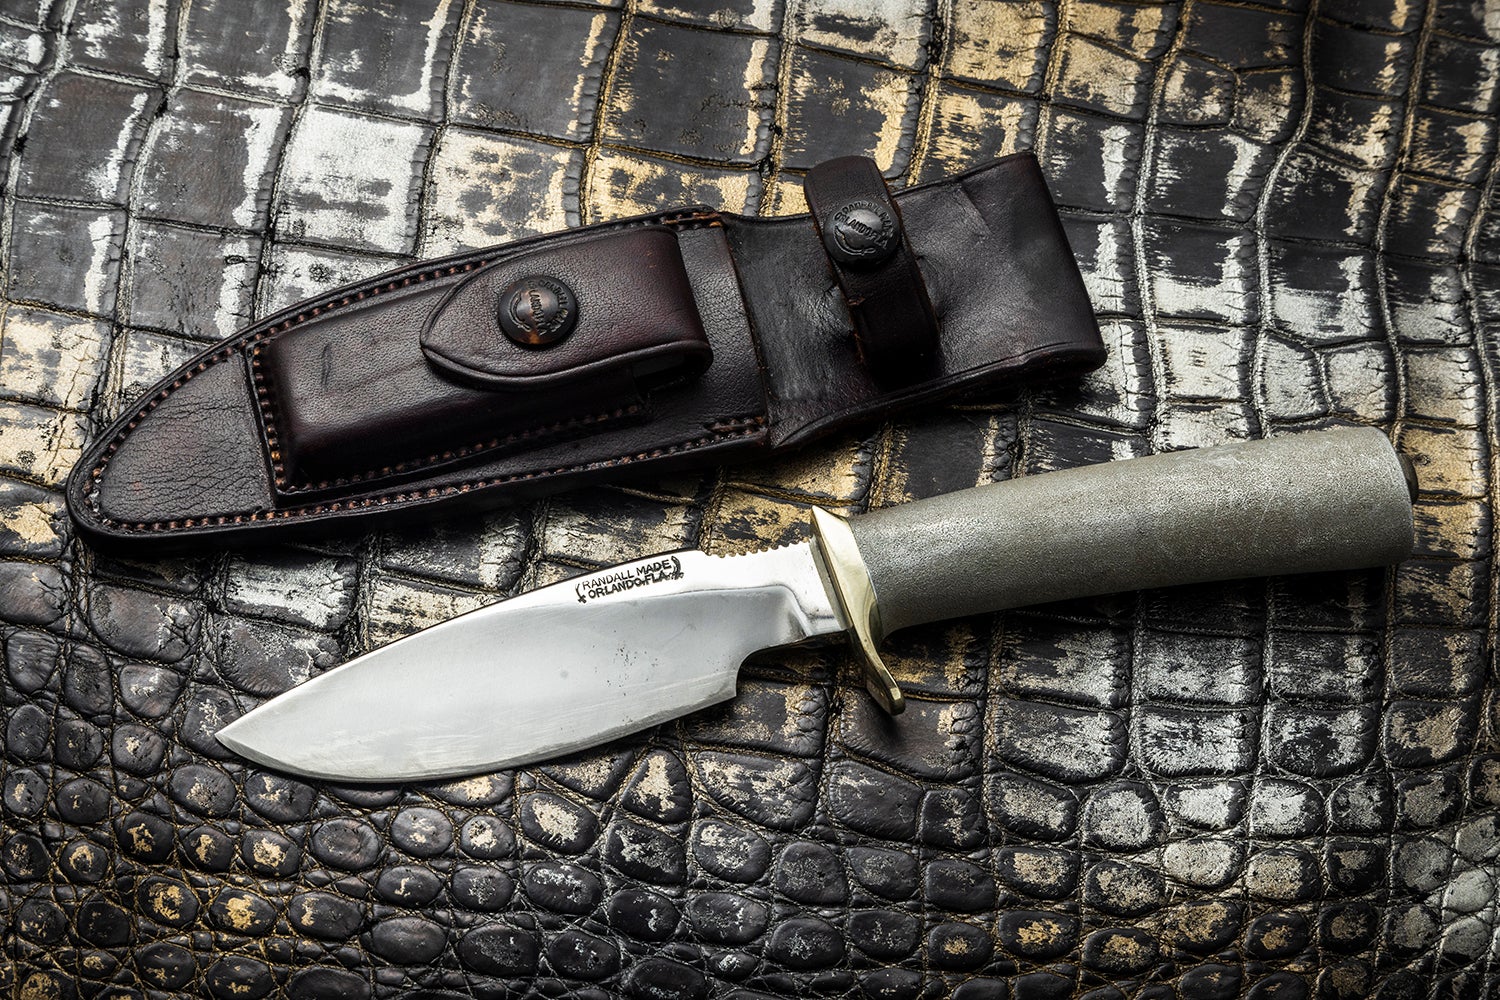 randall knife with sheath